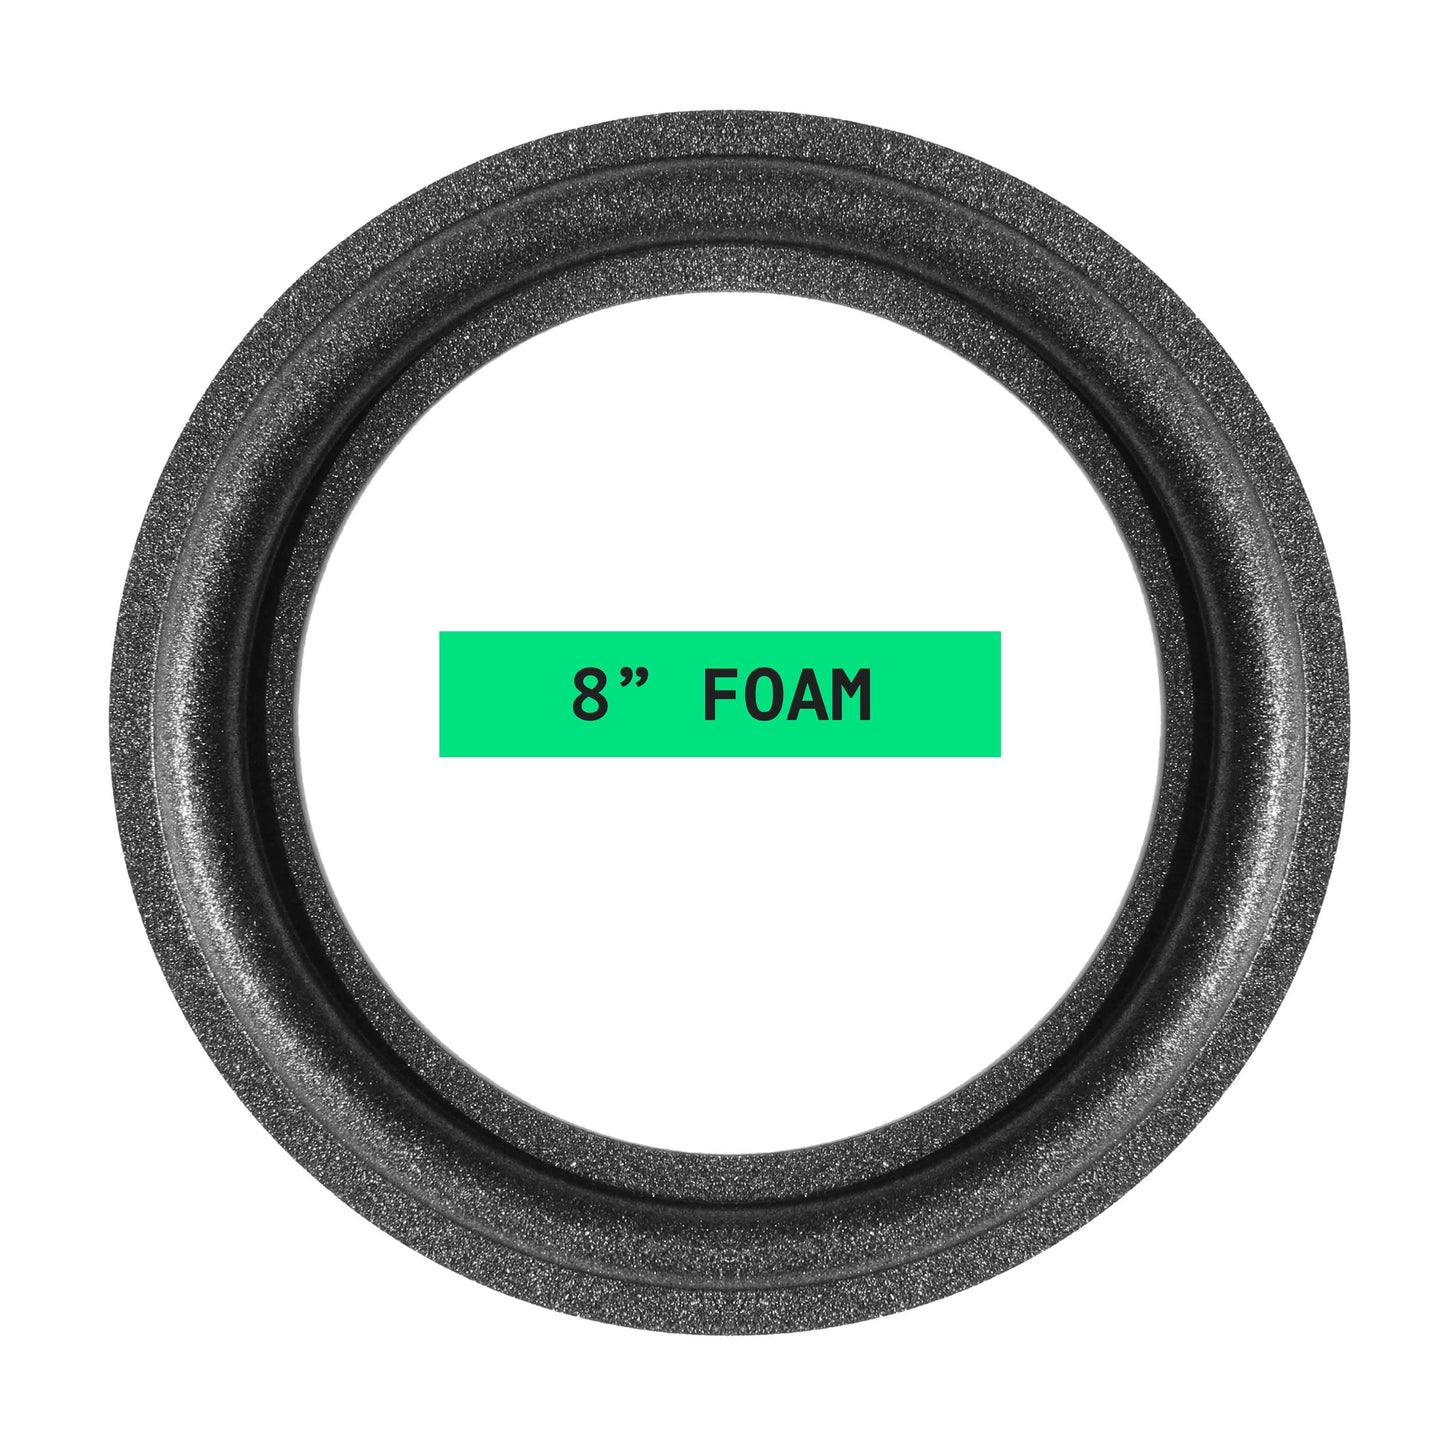 Sony 8" Foam Repair Kit